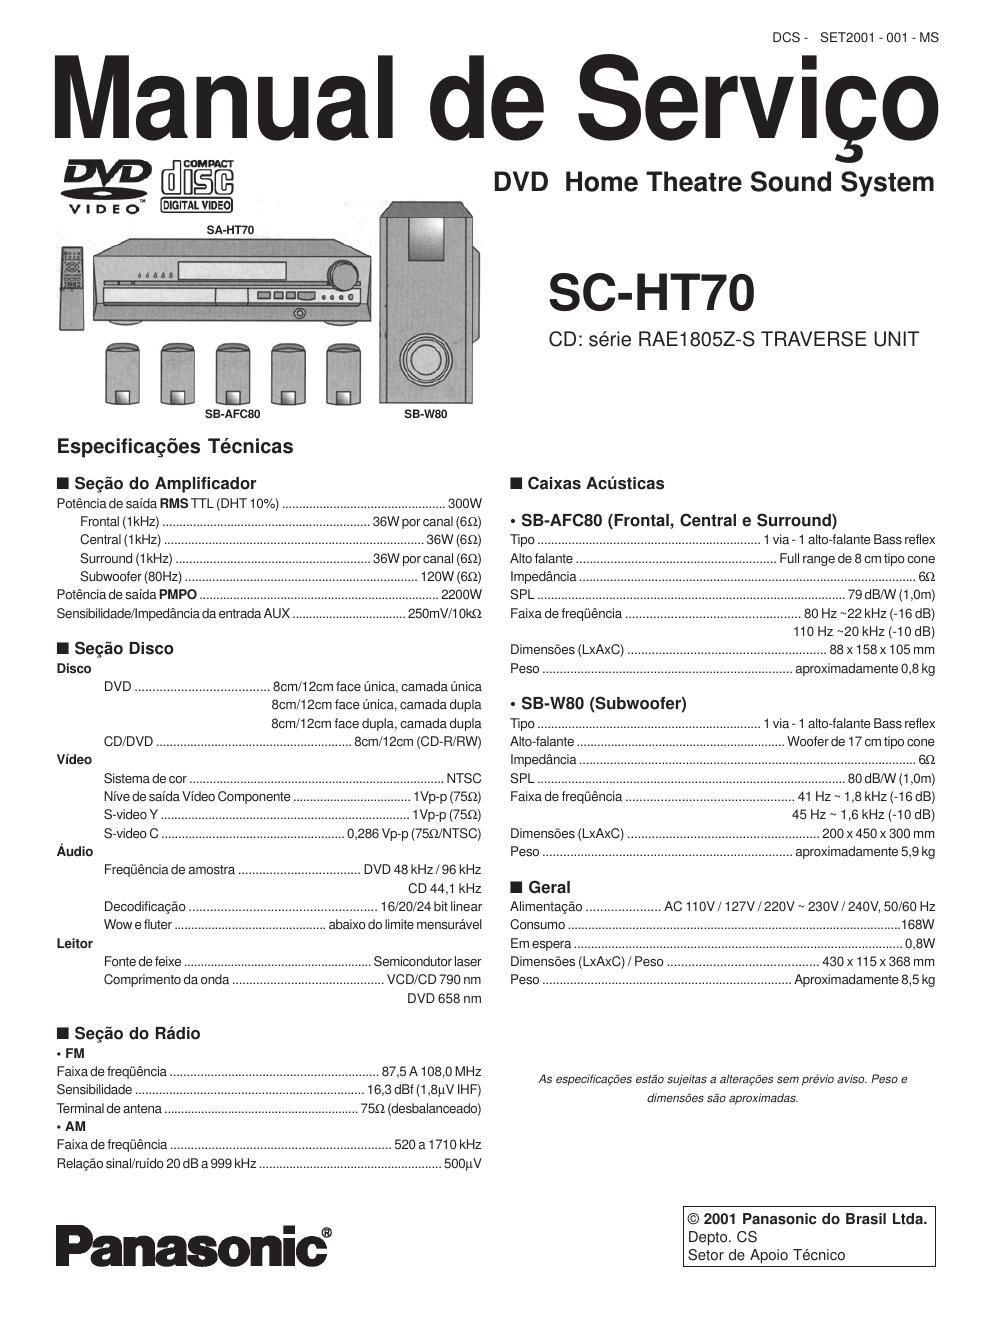 panasonic sc ht 70 service manual